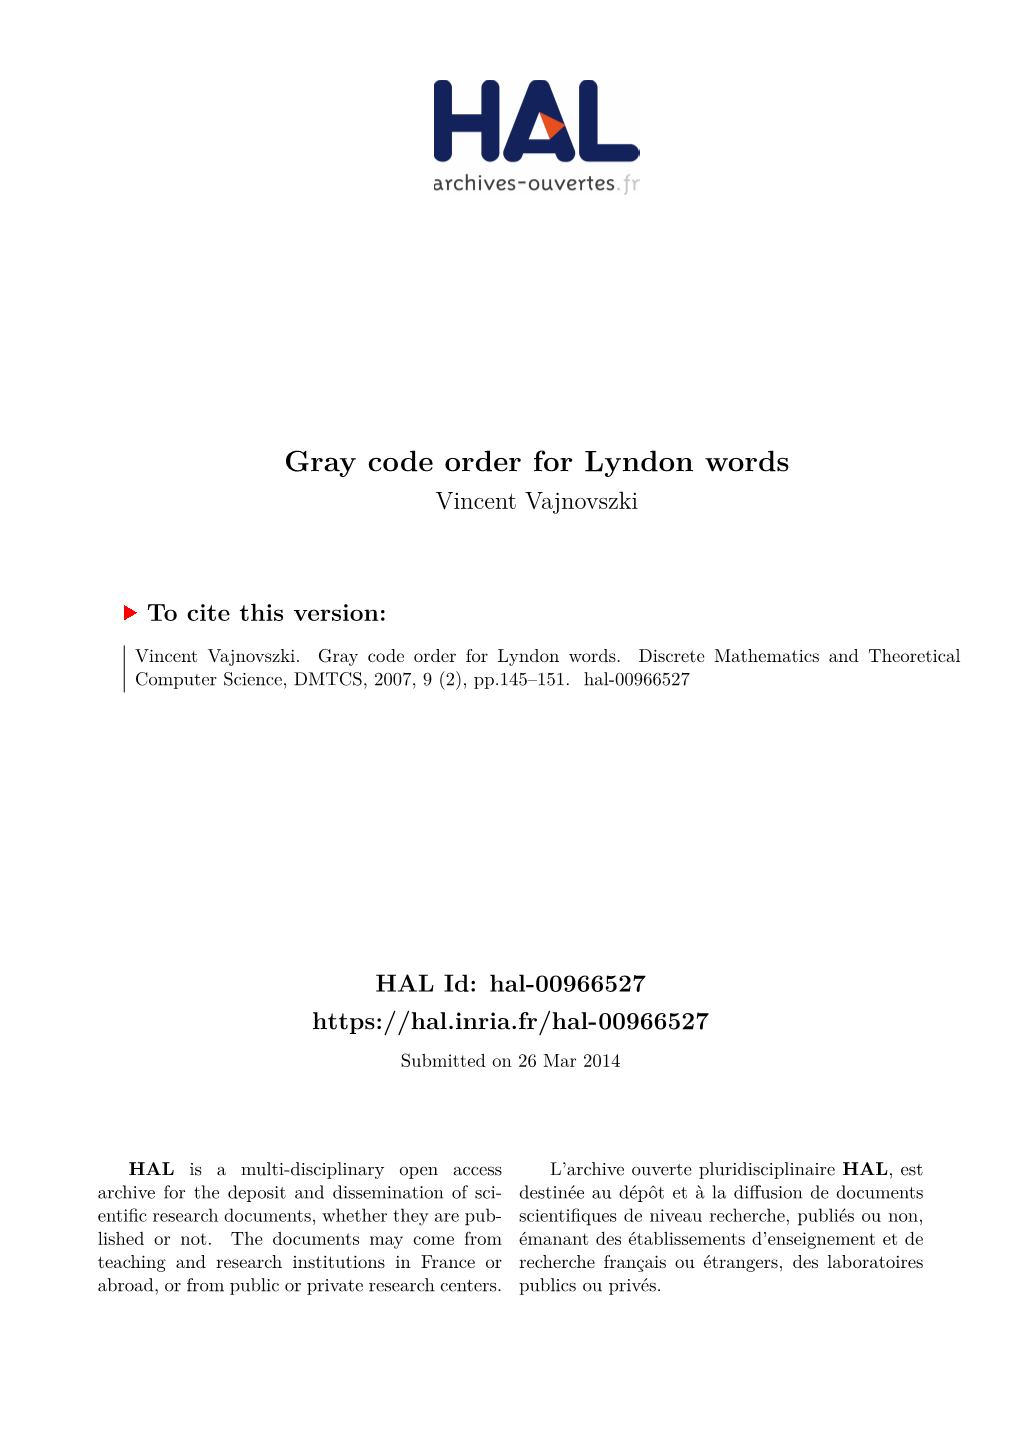 Gray Code Order for Lyndon Words Vincent Vajnovszki